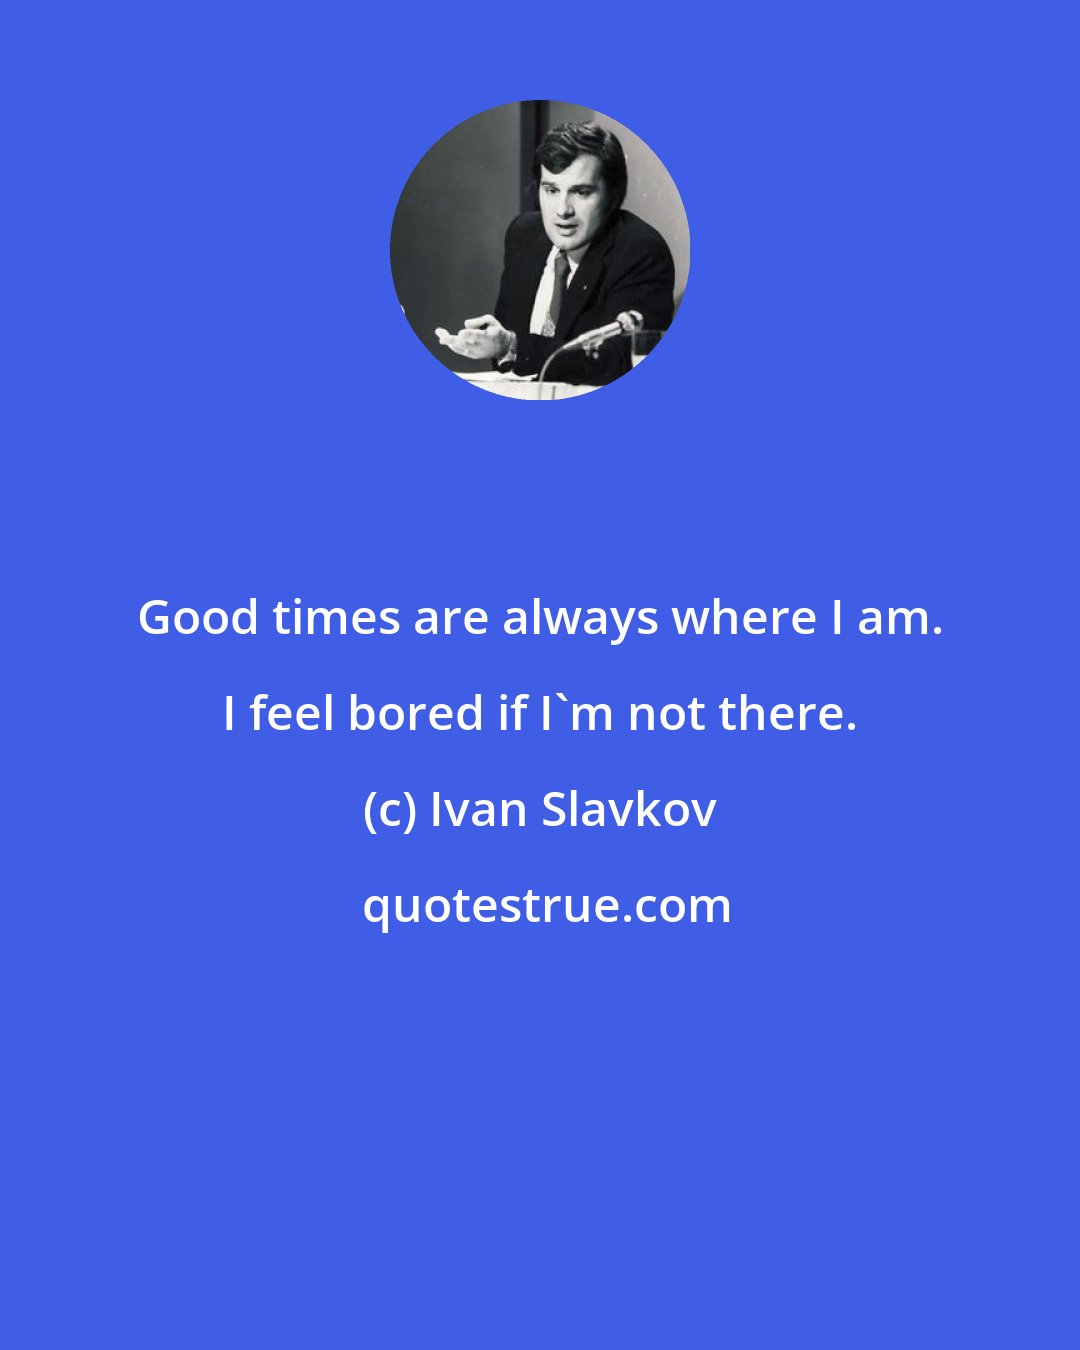 Ivan Slavkov: Good times are always where I am. I feel bored if I'm not there.